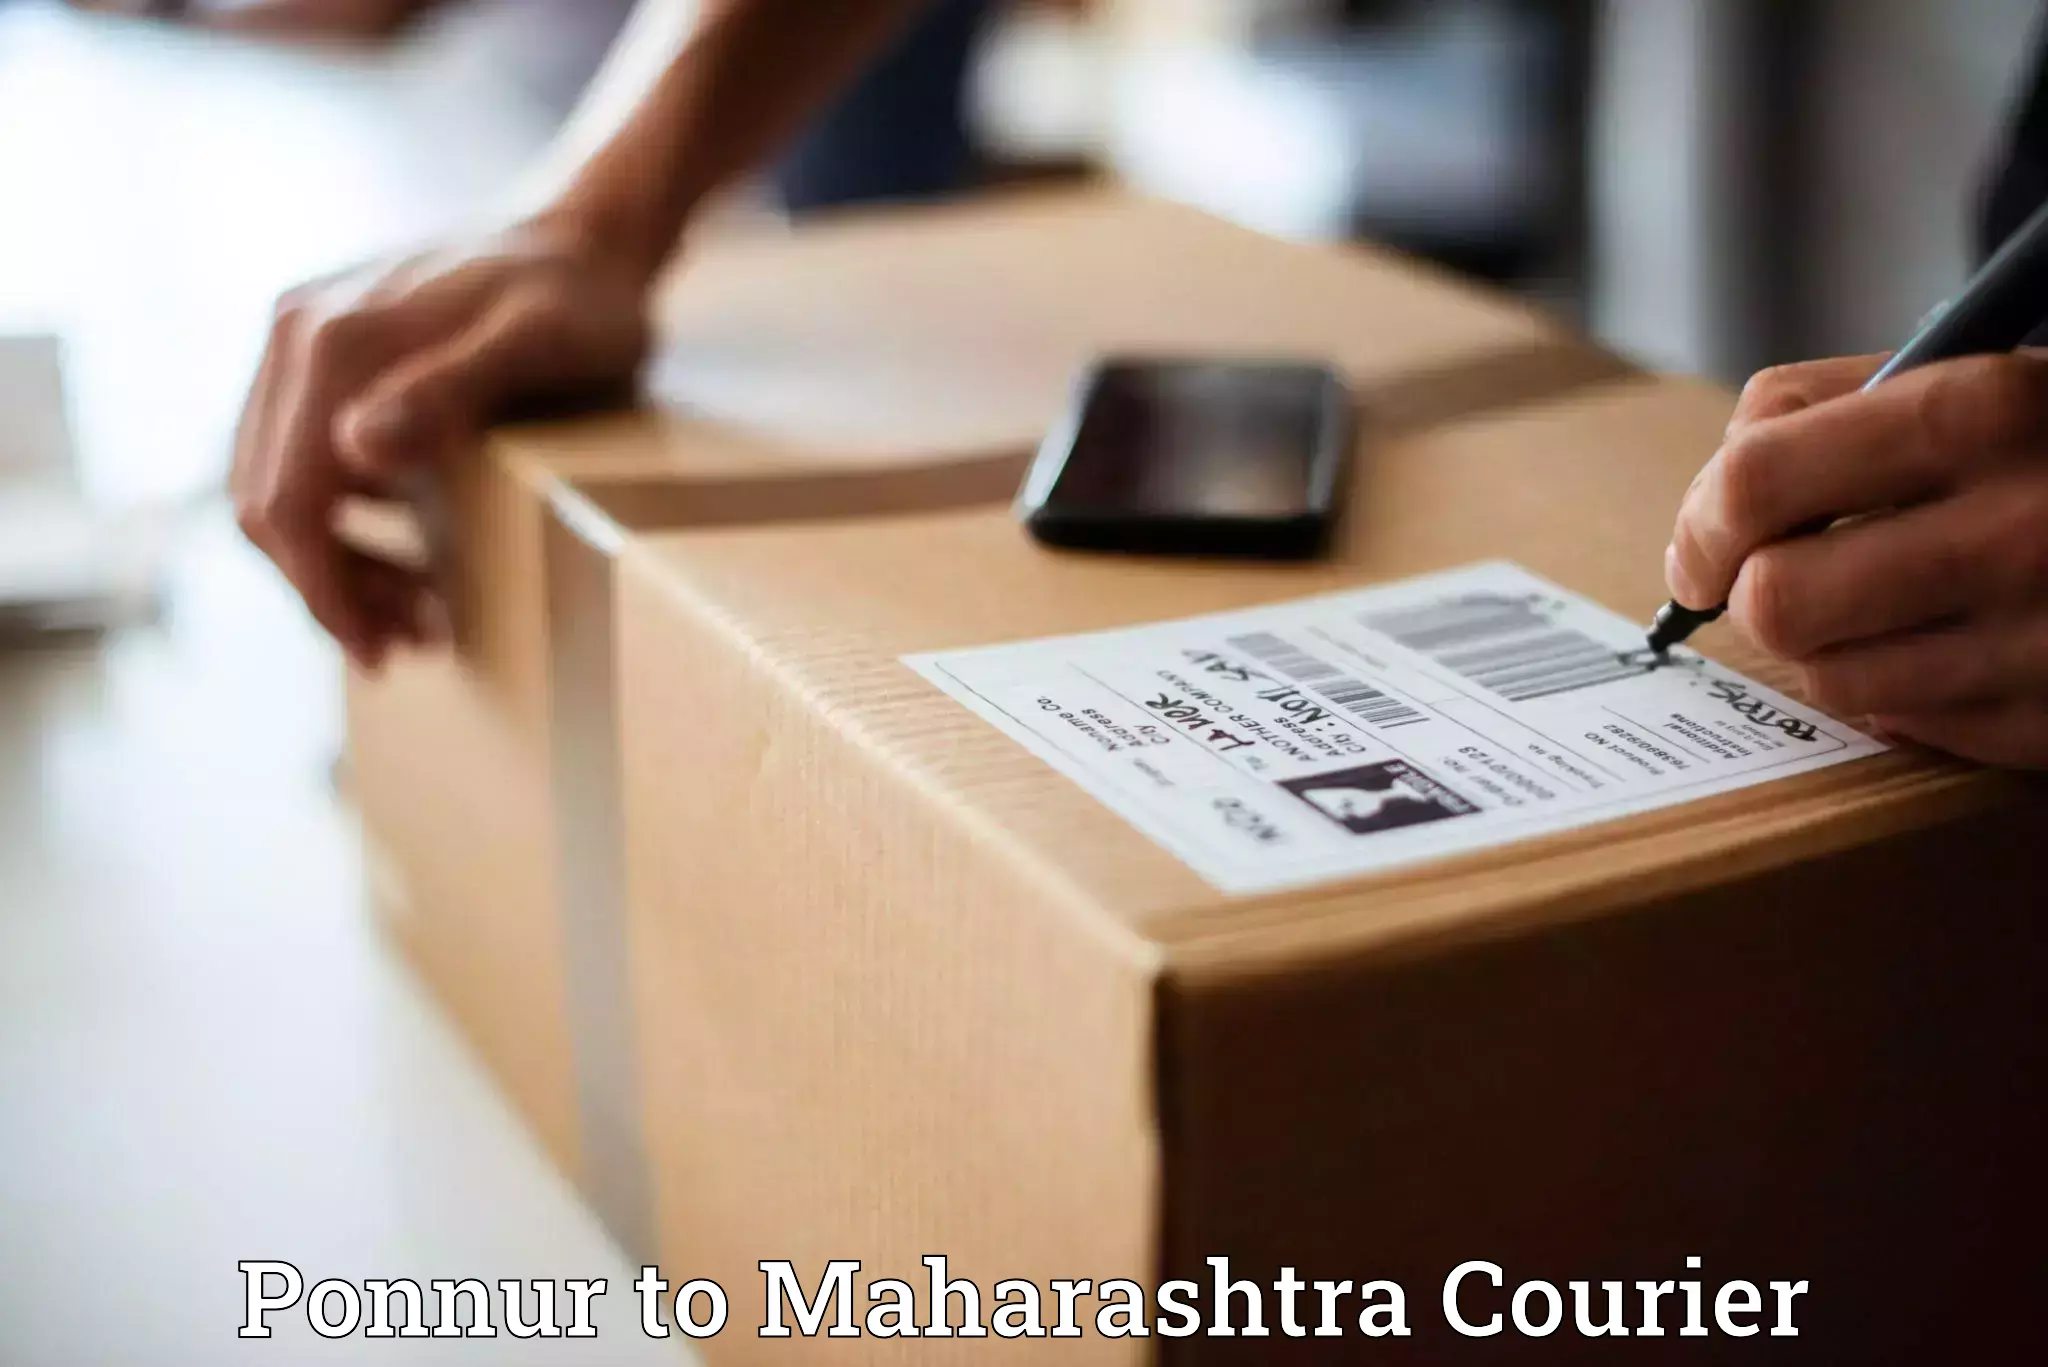 Global delivery options Ponnur to Mahabaleshwar